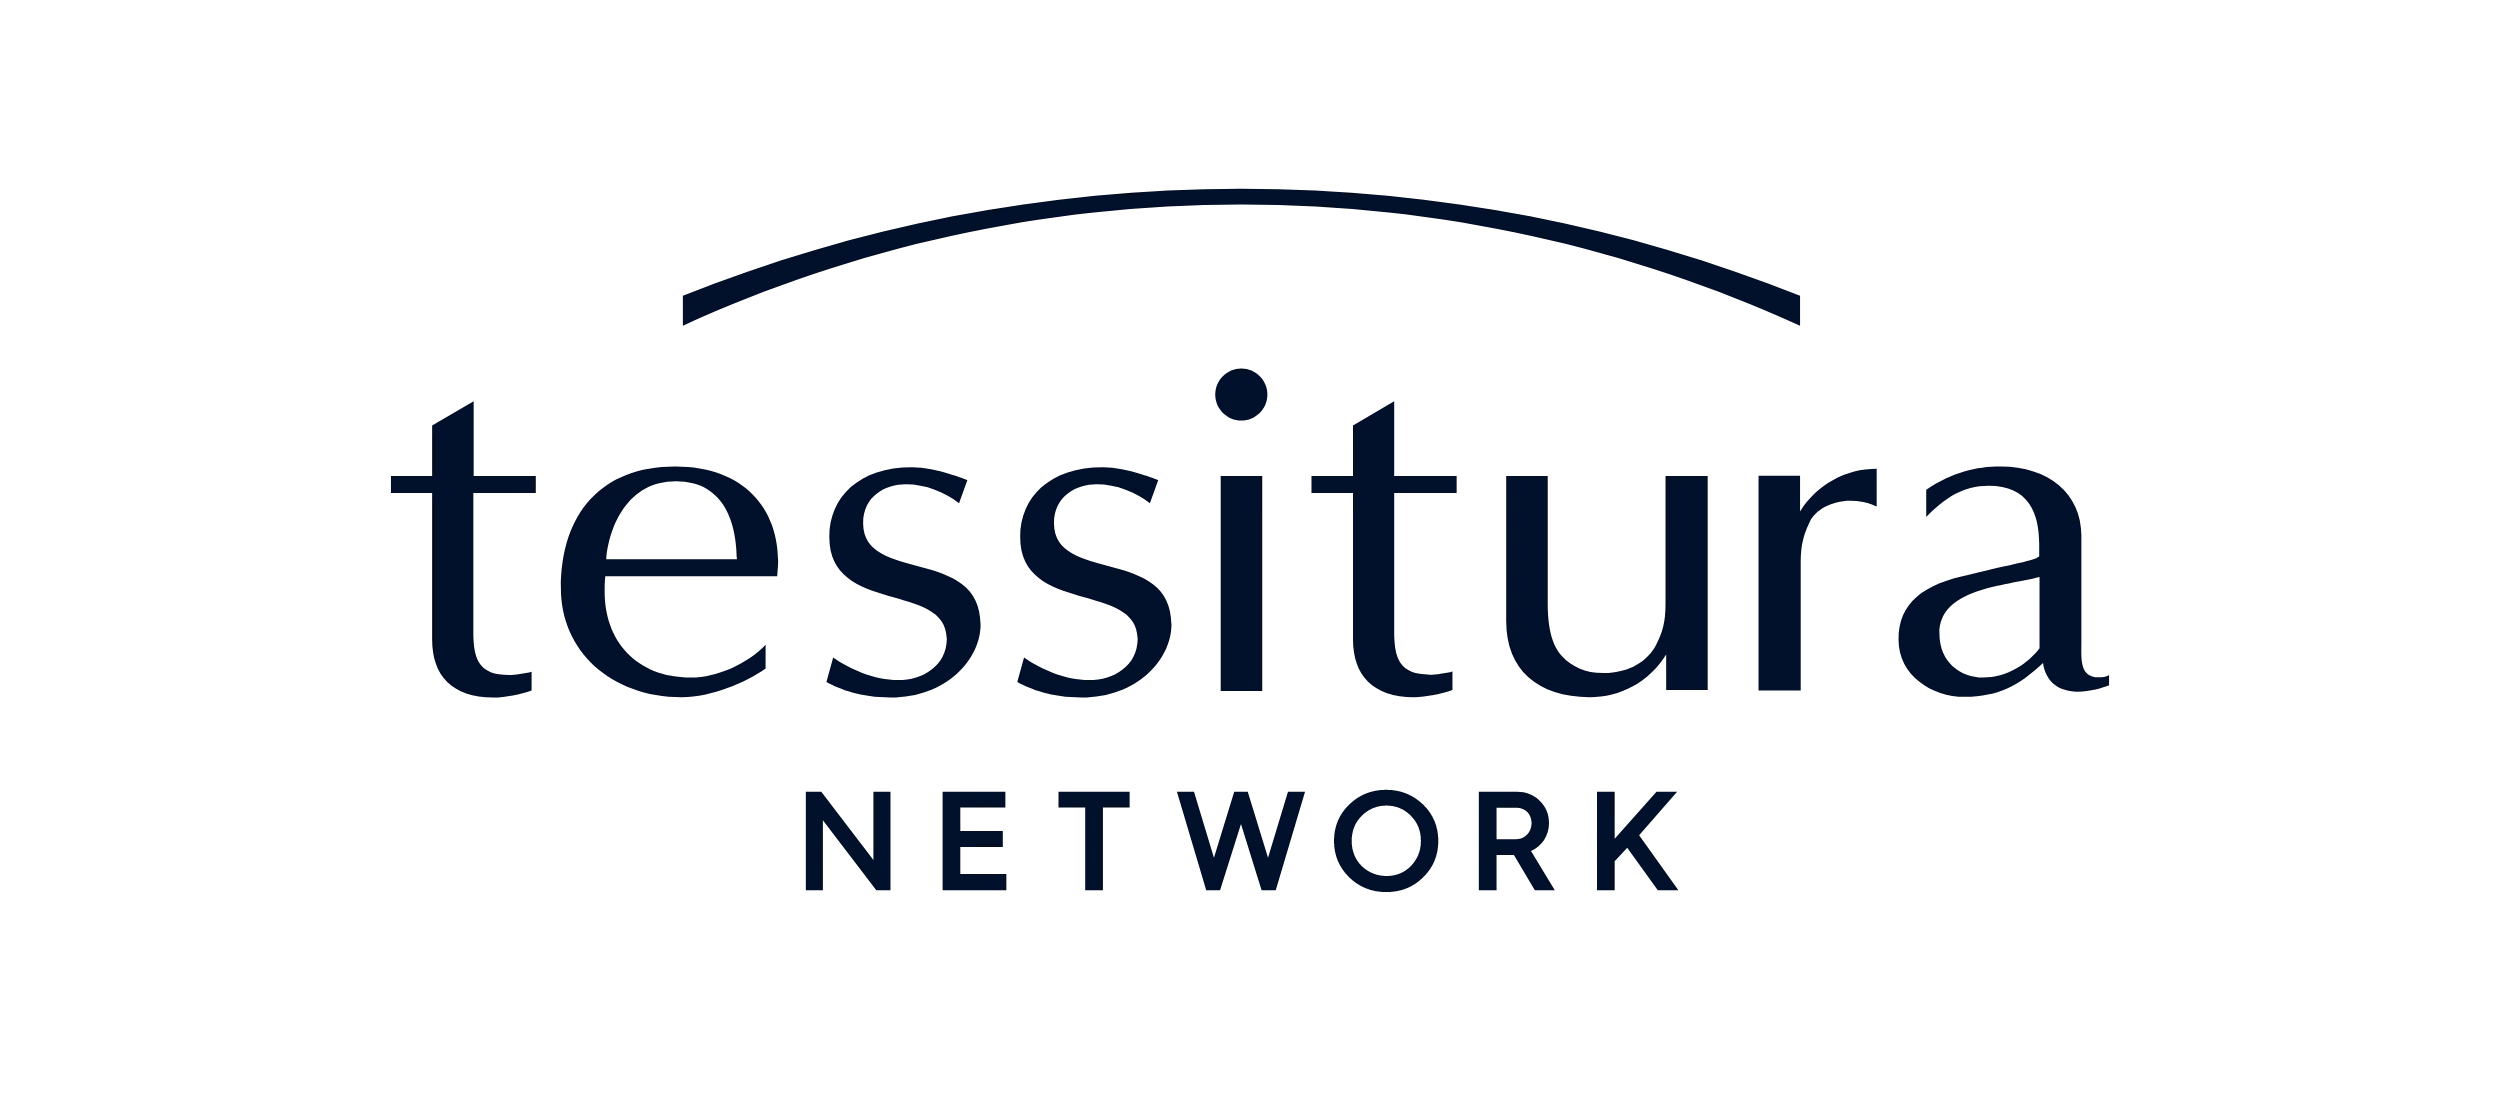 An image of the Tessitura logo.